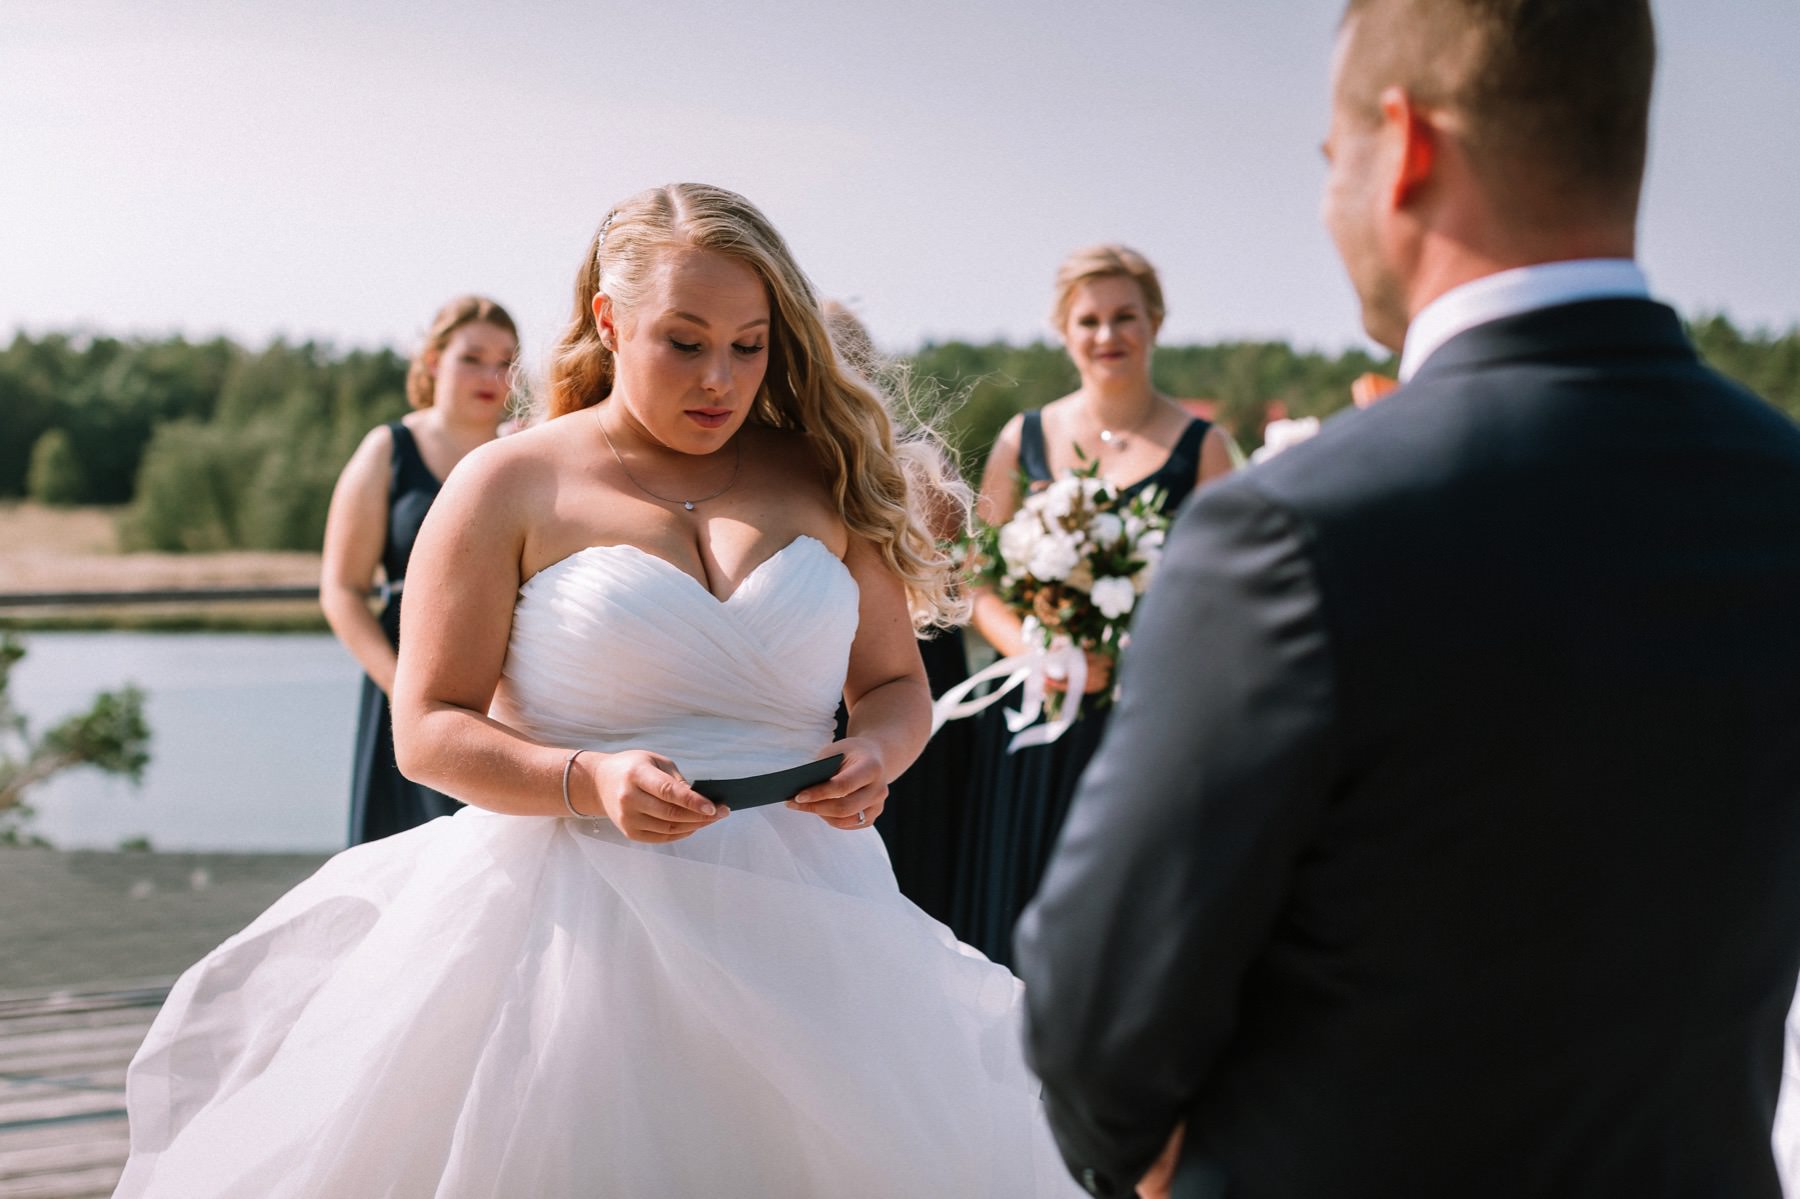 Outdoor wedding Finland